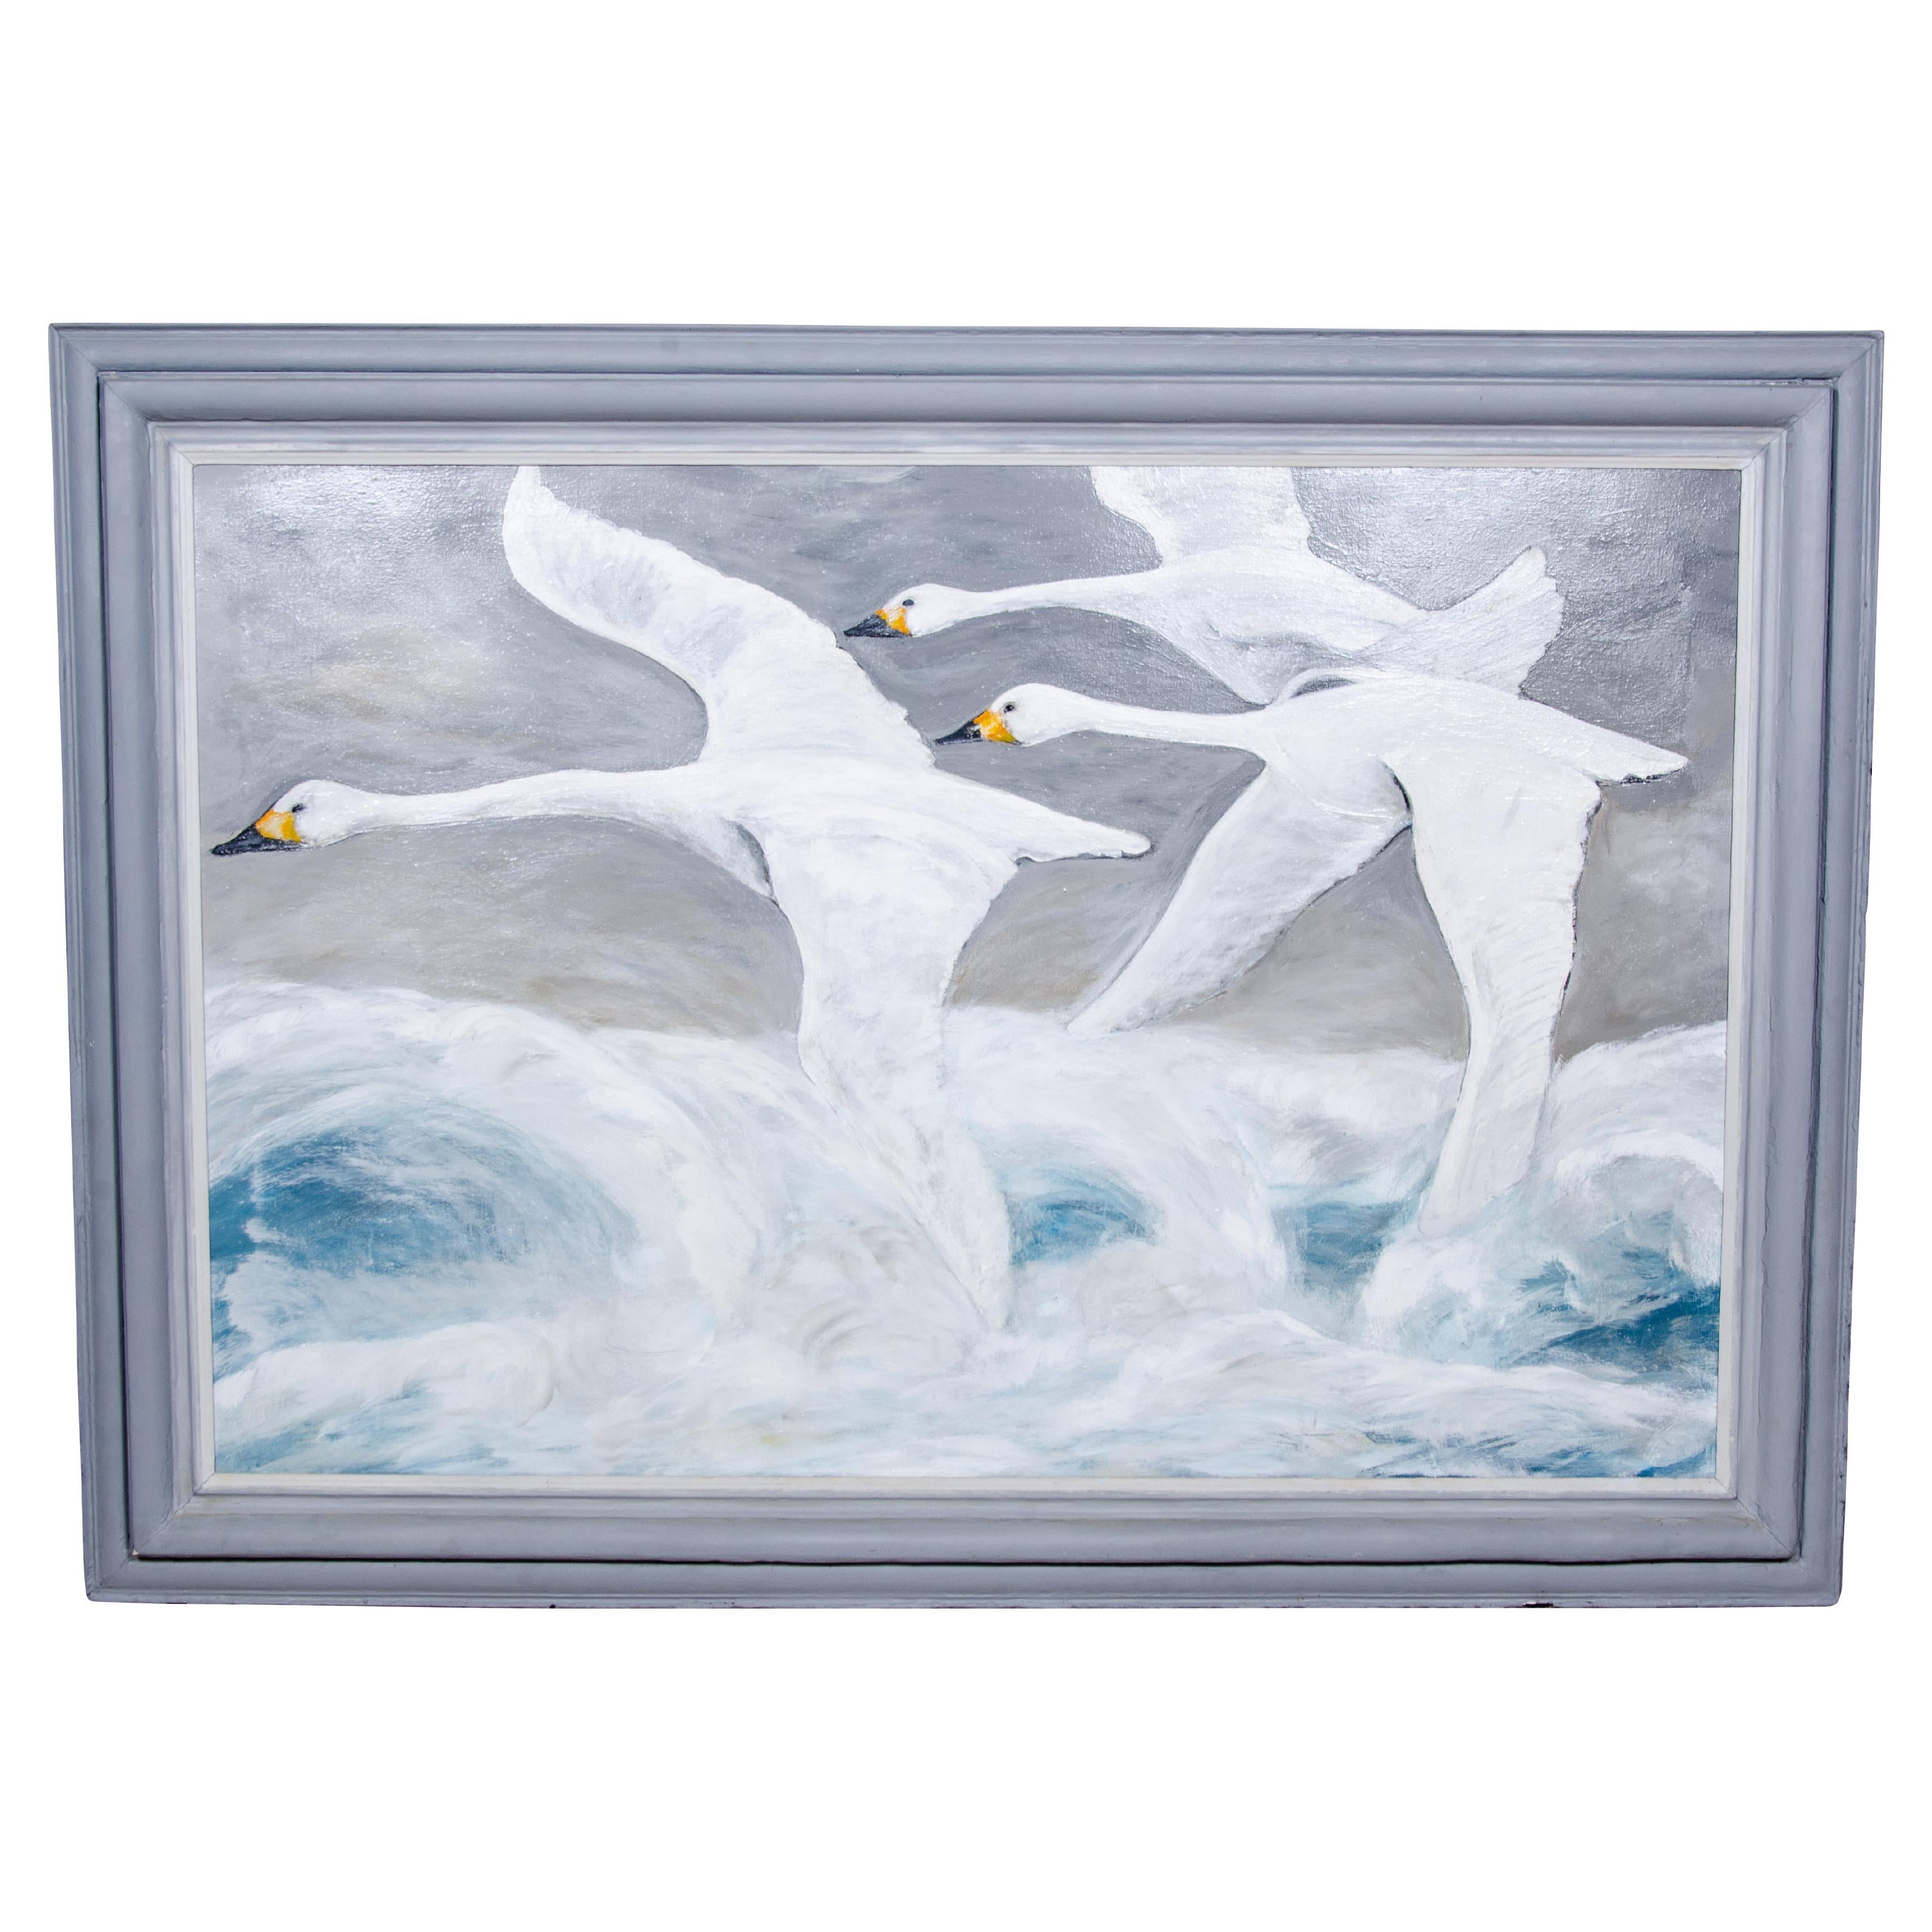 William Chewning Óleo sobre lienzo Pintura de cisnes volando